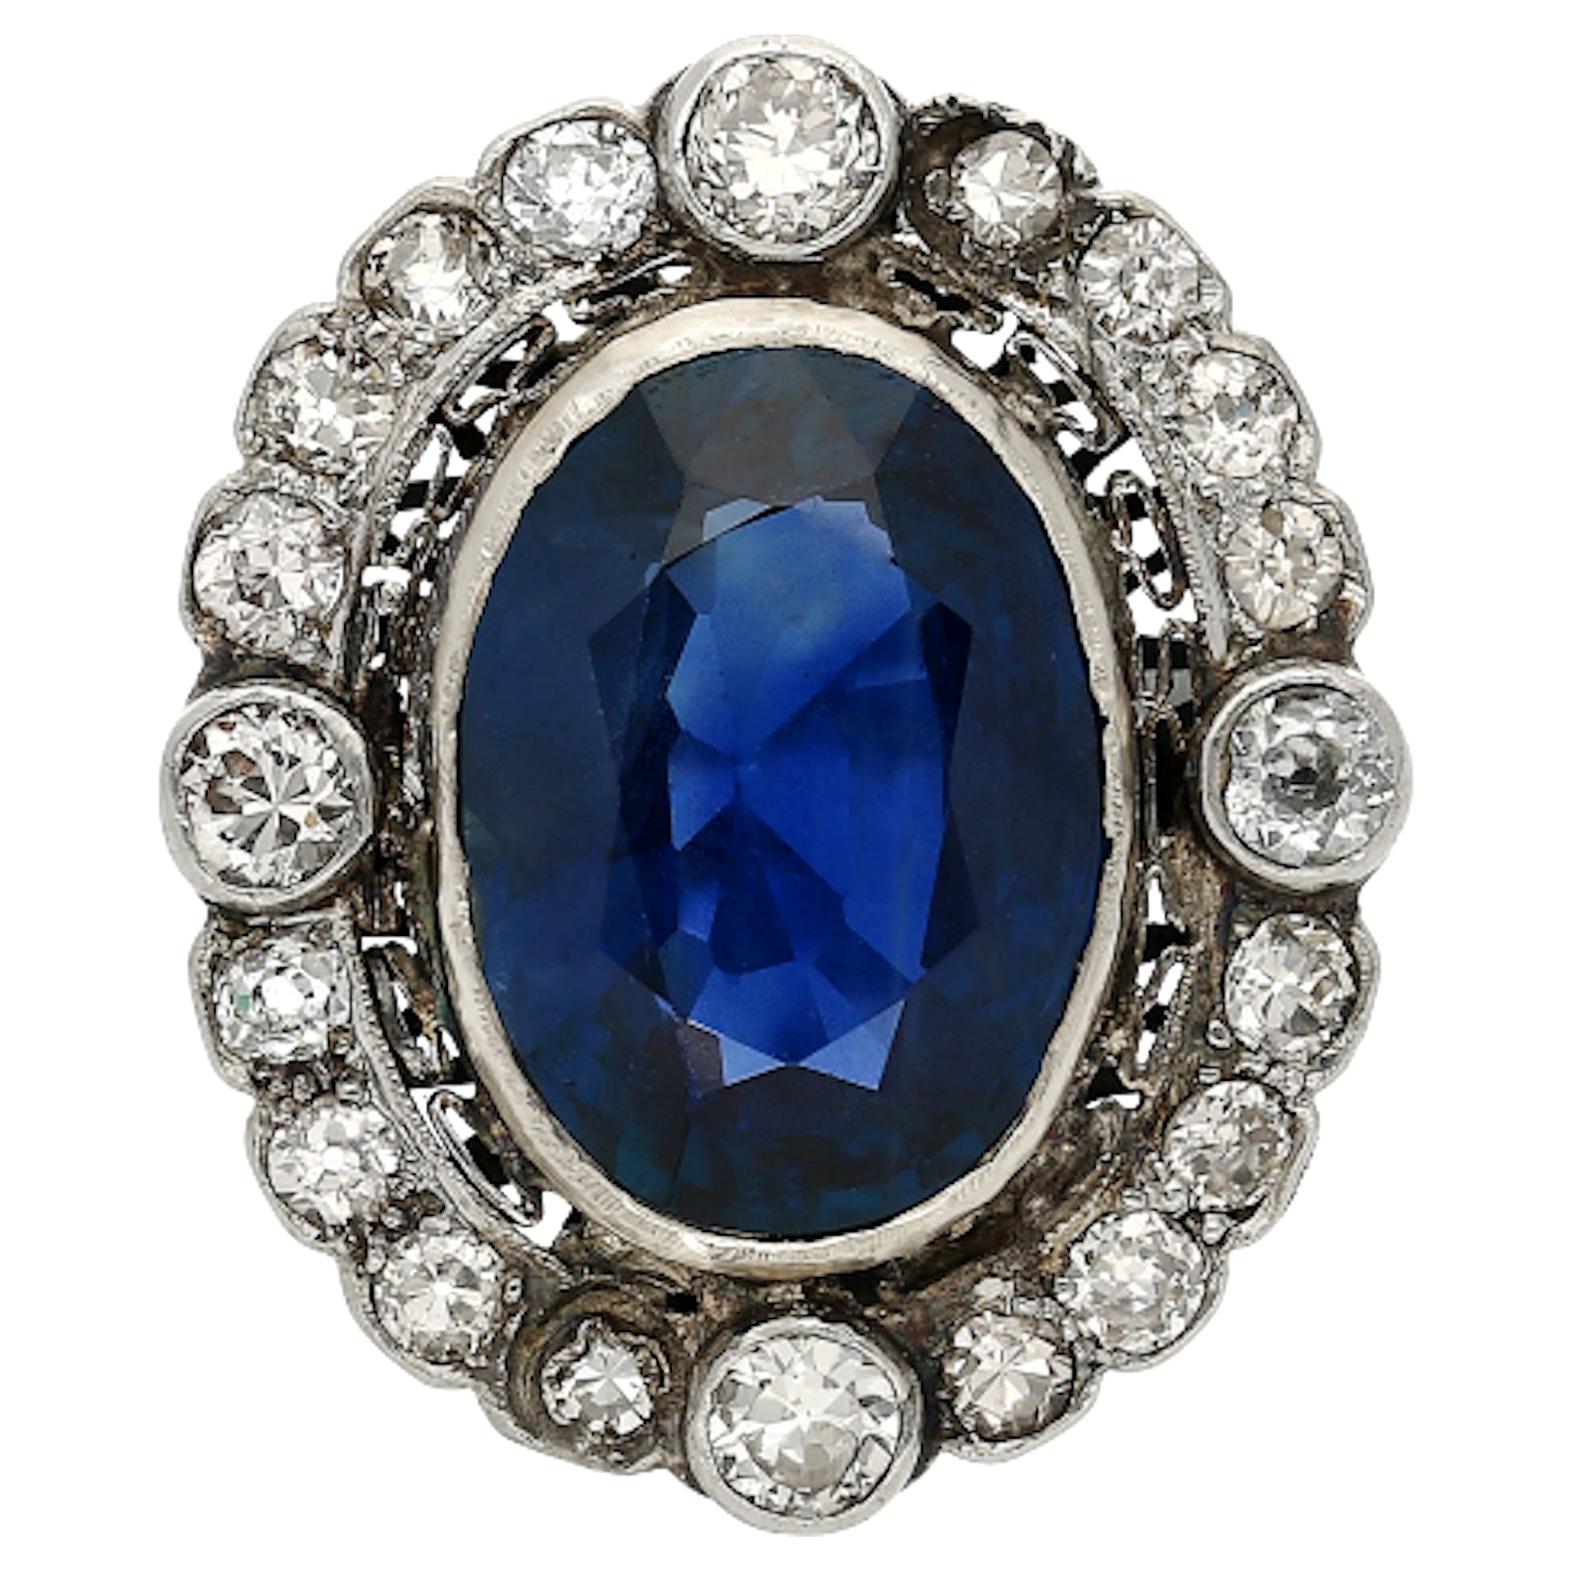 19th Century Victorian-Era 15 Carat Burma Oval-Cut Sapphire and Diamond Ring